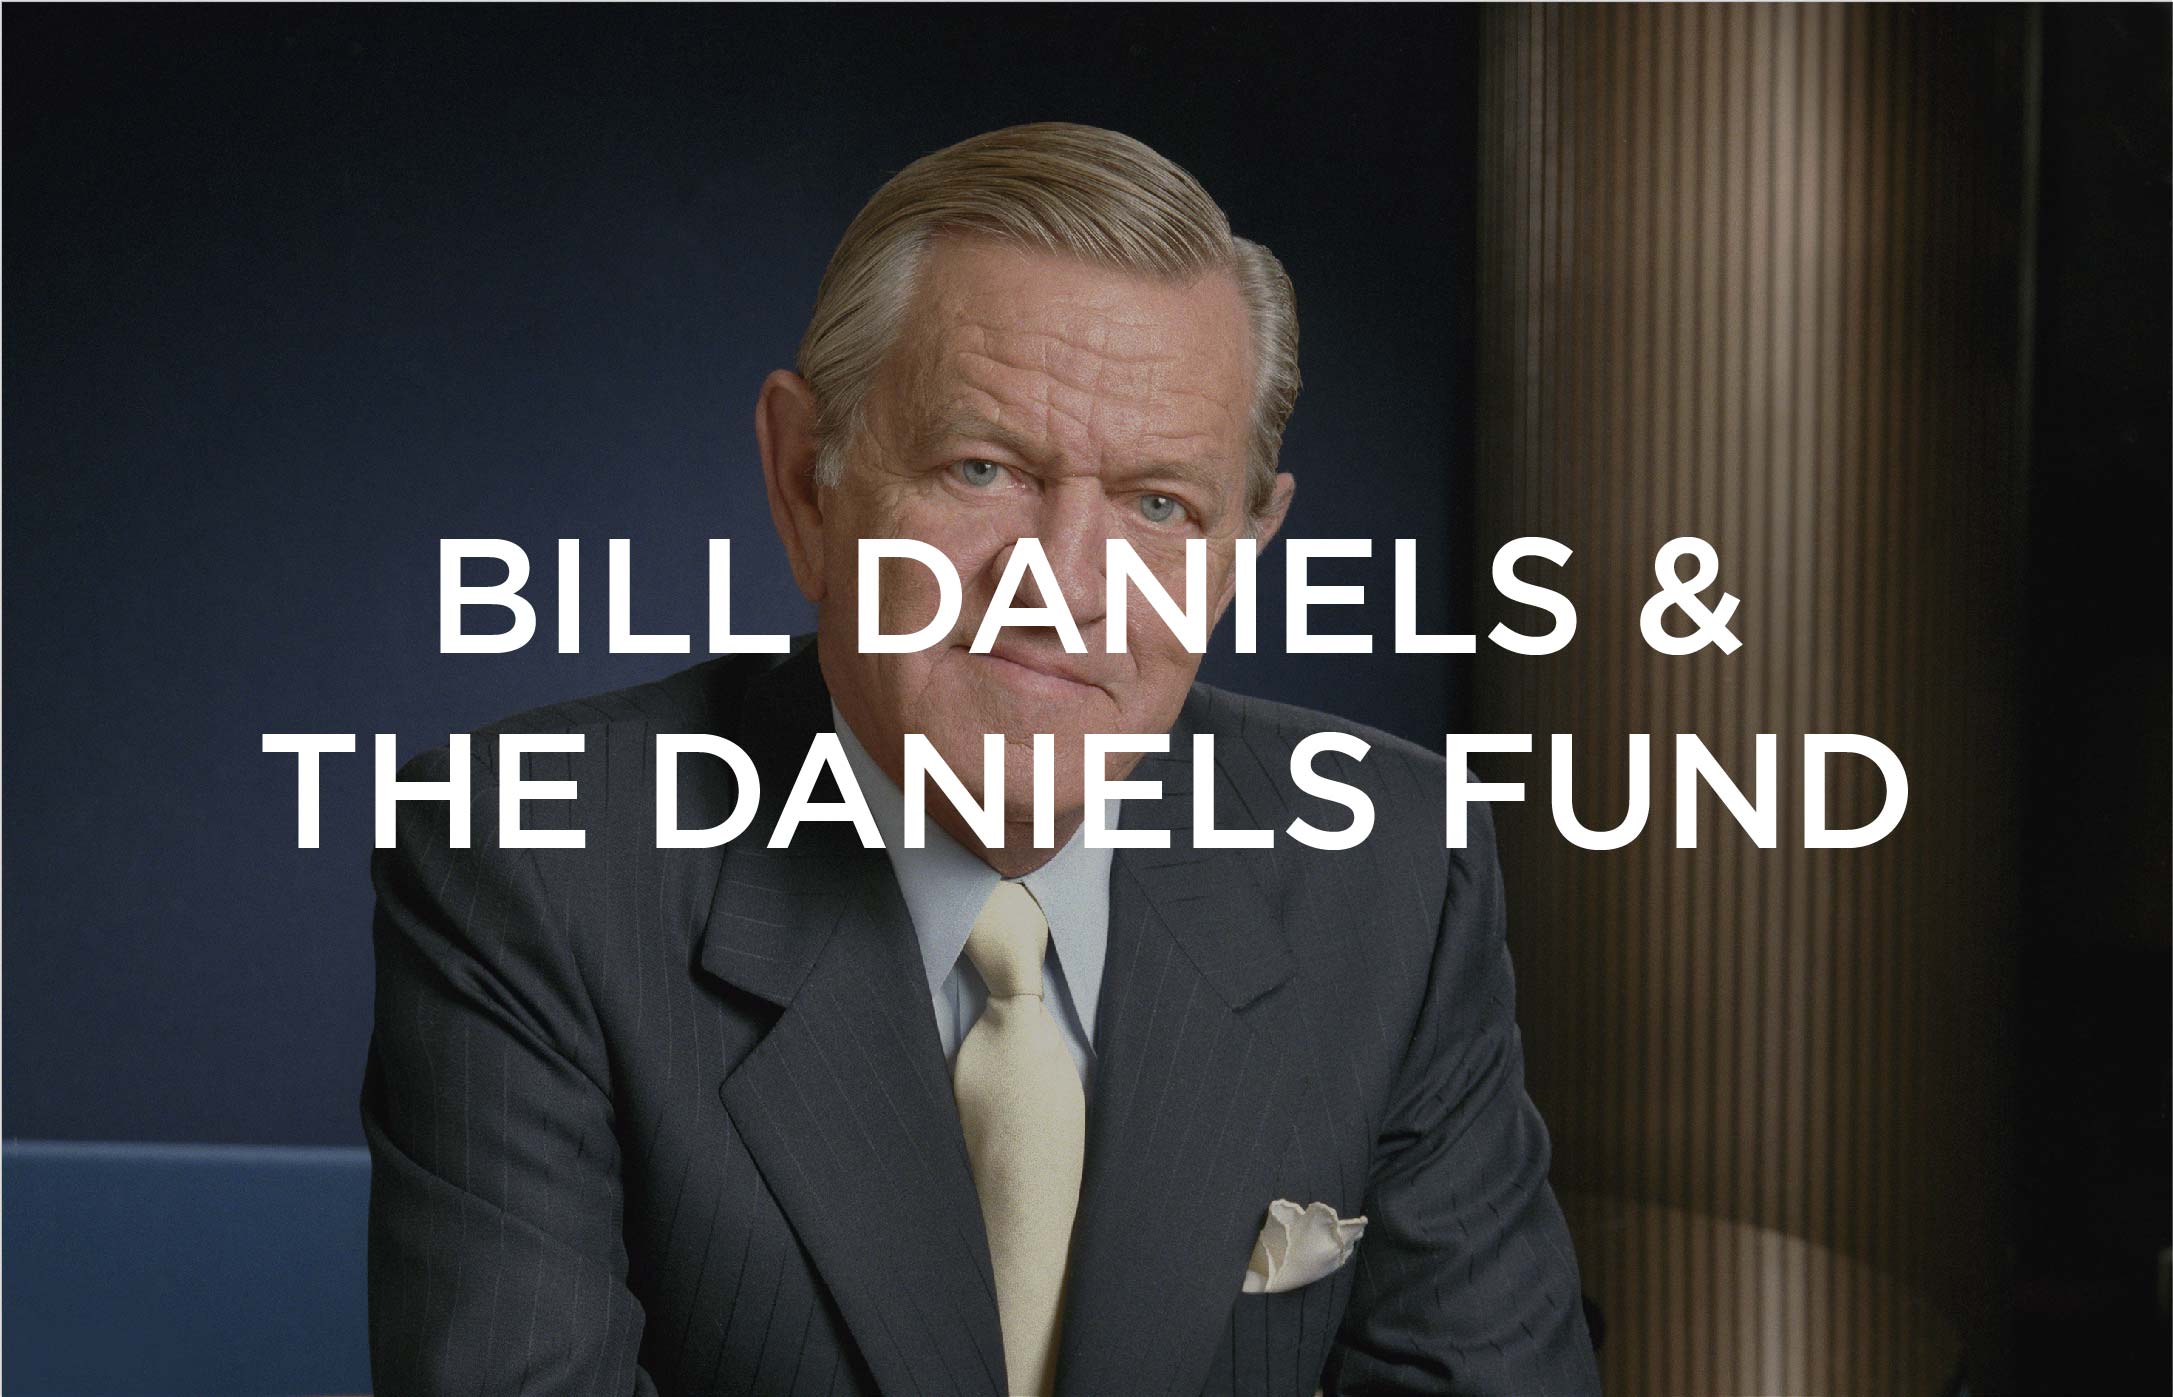 Bill Daniels and The Daniels Fund menu tile